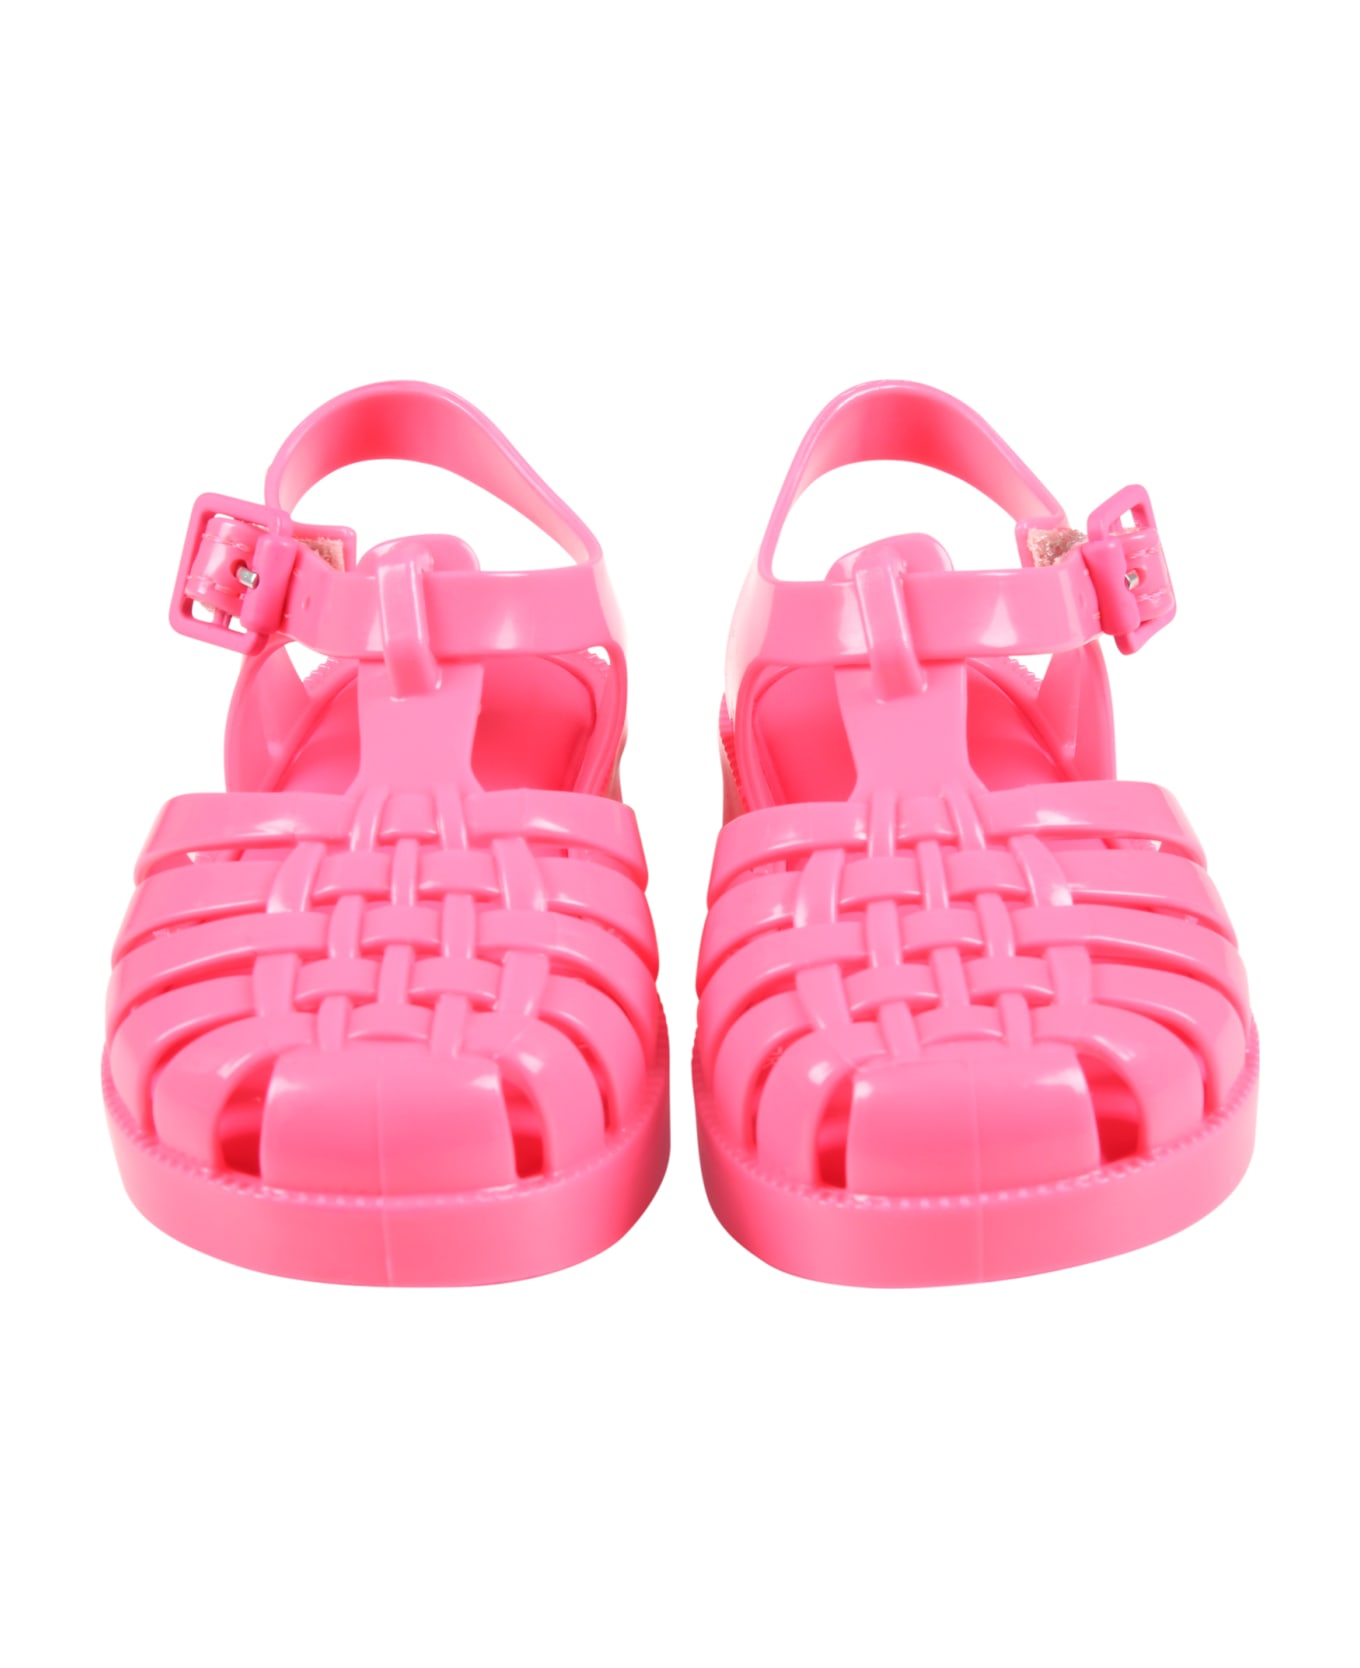 Melissa Neon Pink Sandals For Girl - Fuchsia